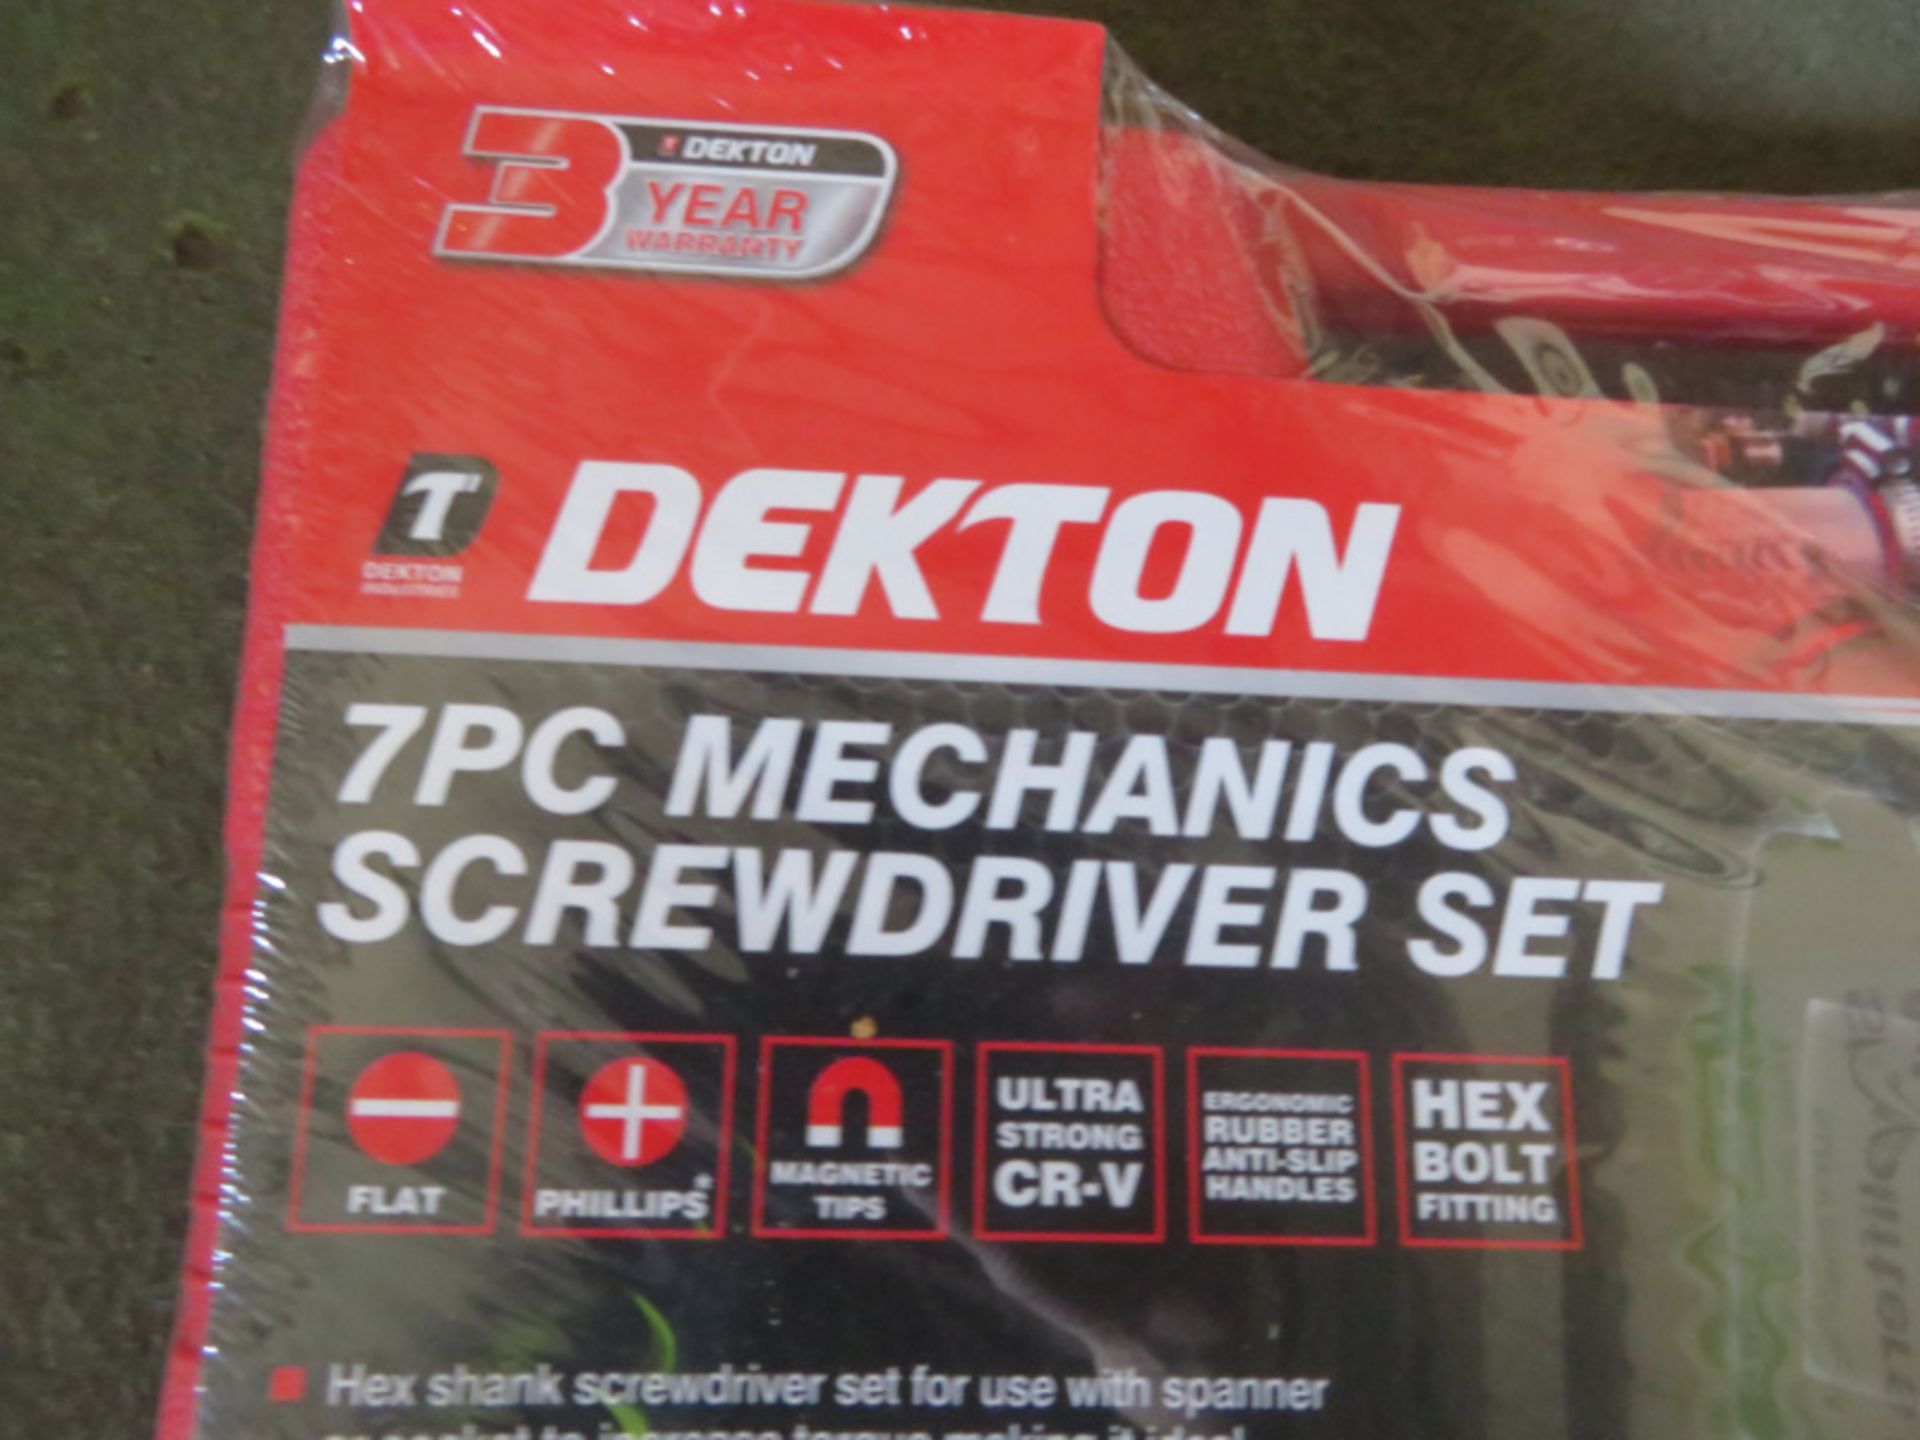 Dekton 7pc Mechanics Screwdriver Set - Image 2 of 3